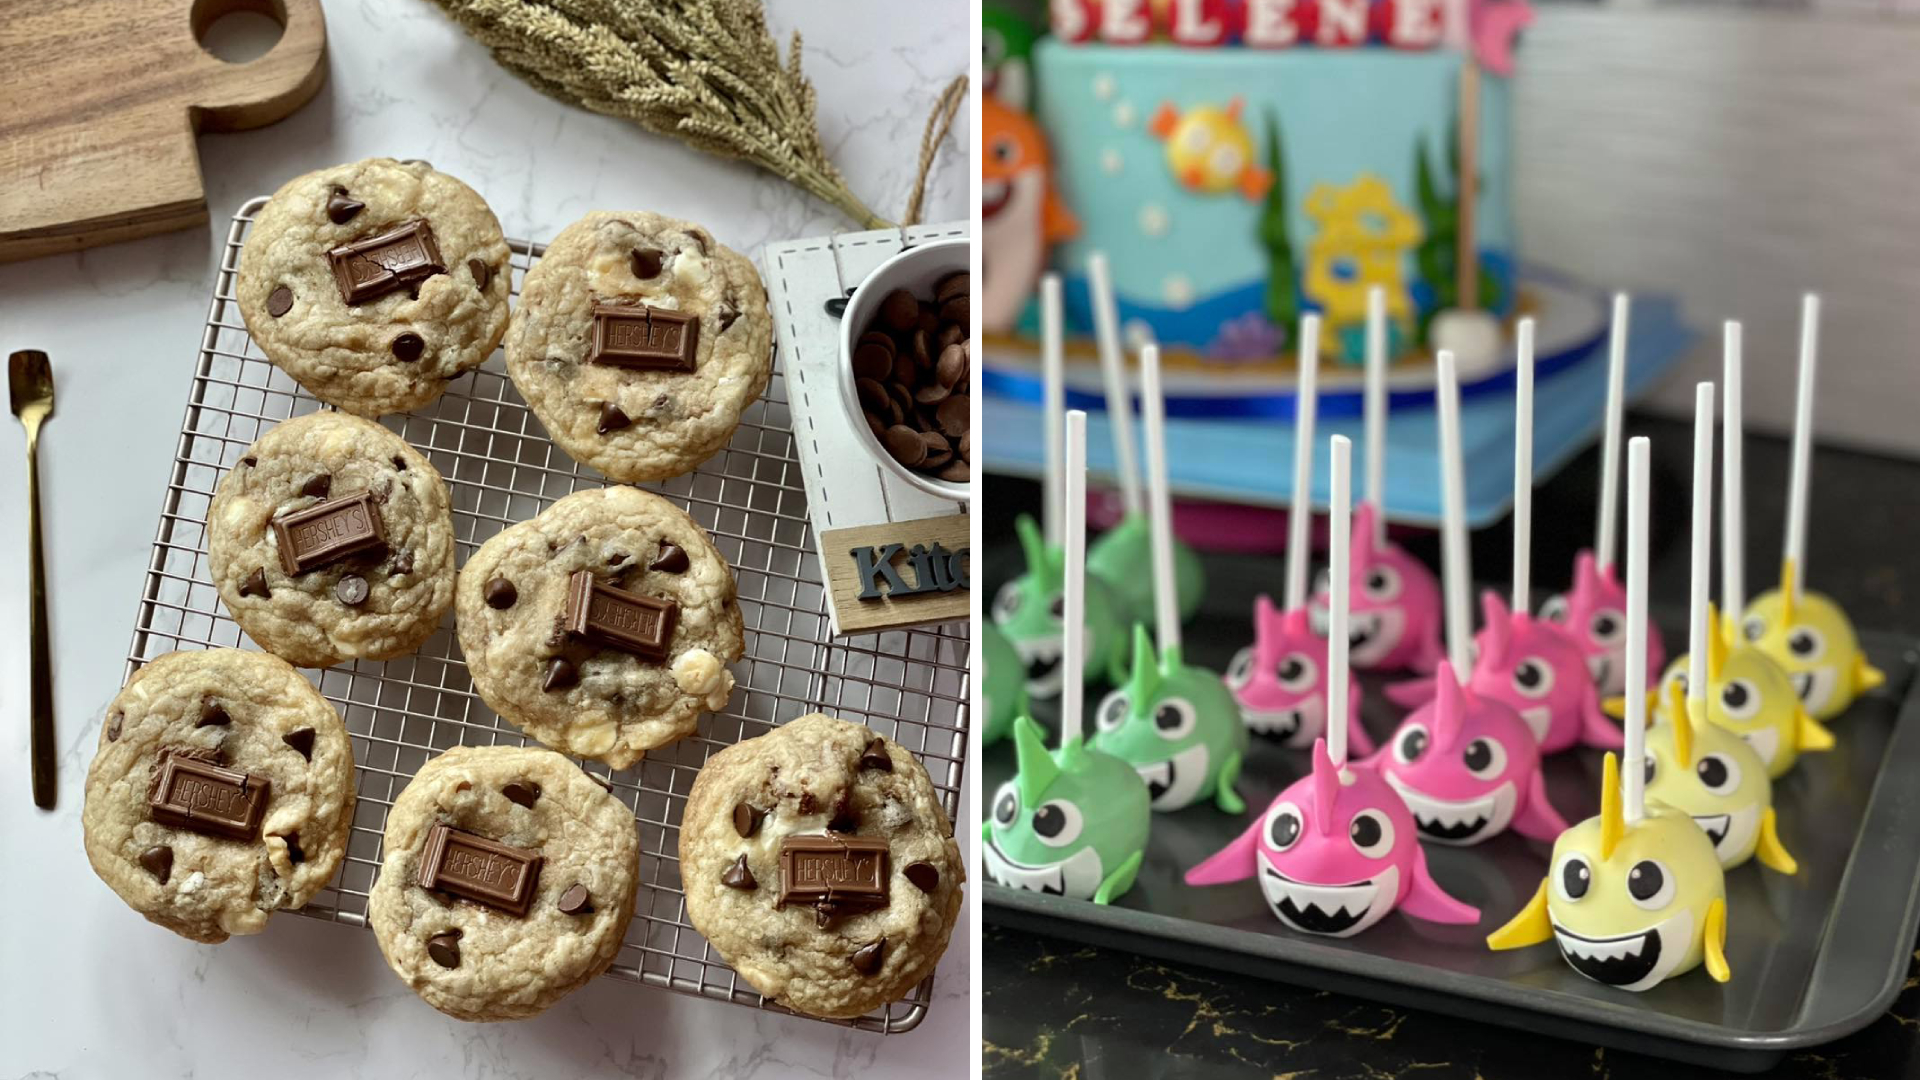 Bibi's cakes - cookies and cake pops